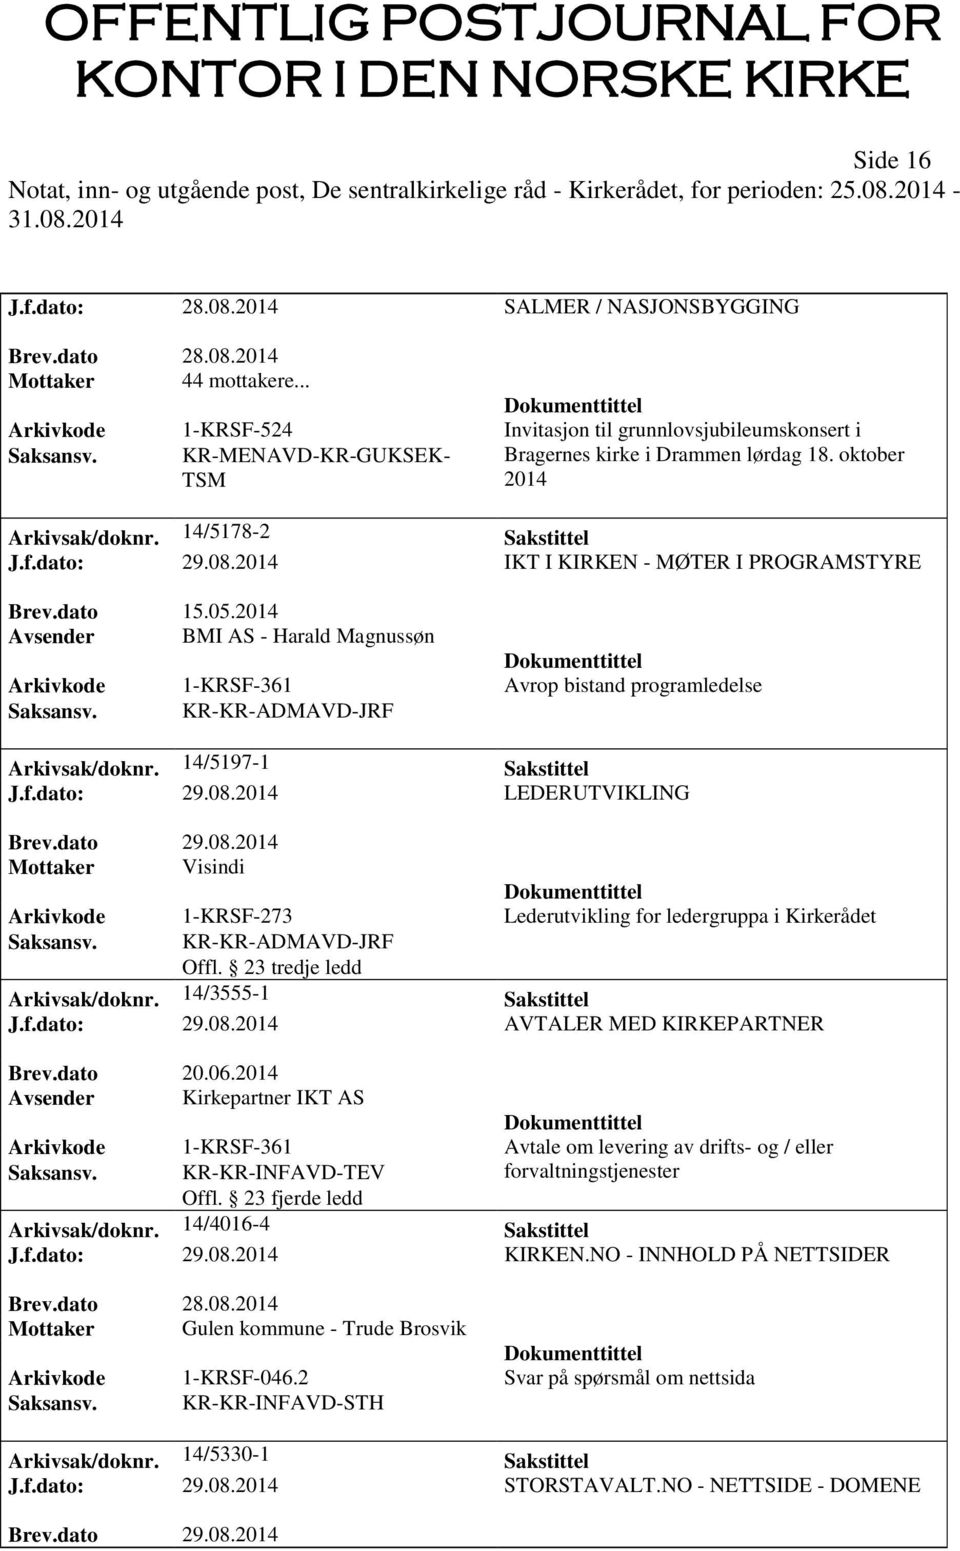 2014 Avsender BMI AS - Harald Magnussøn Arkivkode 1-KRSF-361 Avrop bistand programledelse Saksansv. KR-KR-ADMAVD-JRF Arkivsak/doknr. 14/5197-1 Sakstittel J.f.dato: 29.08.2014 LEDERUTVIKLING Brev.